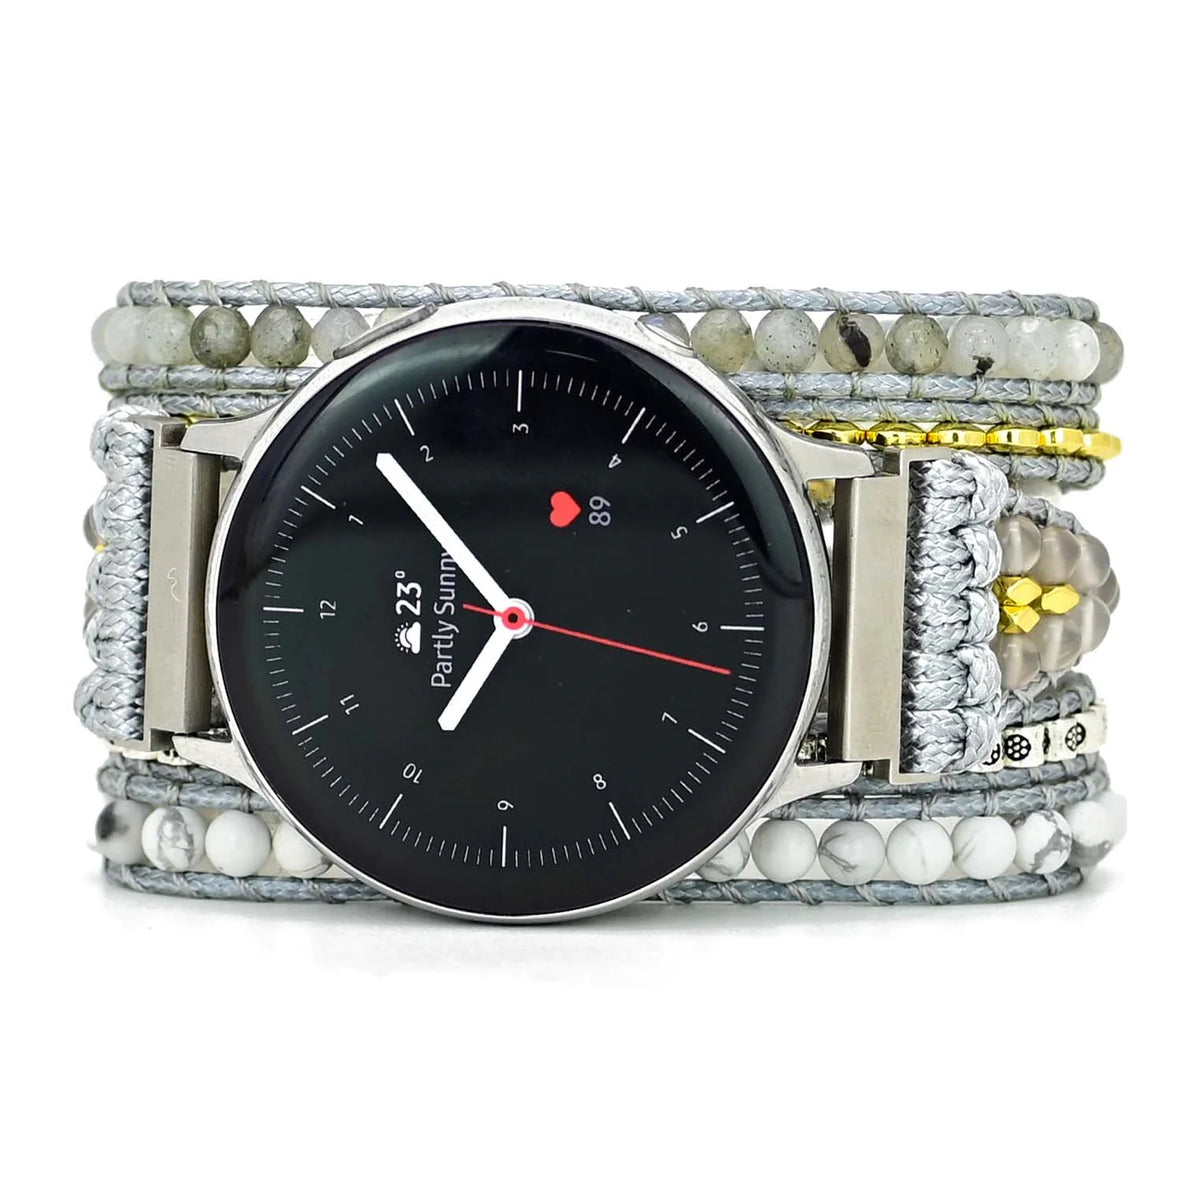 Ethereal Love Watch Bracelet for Samsung Galaxy or Garmin